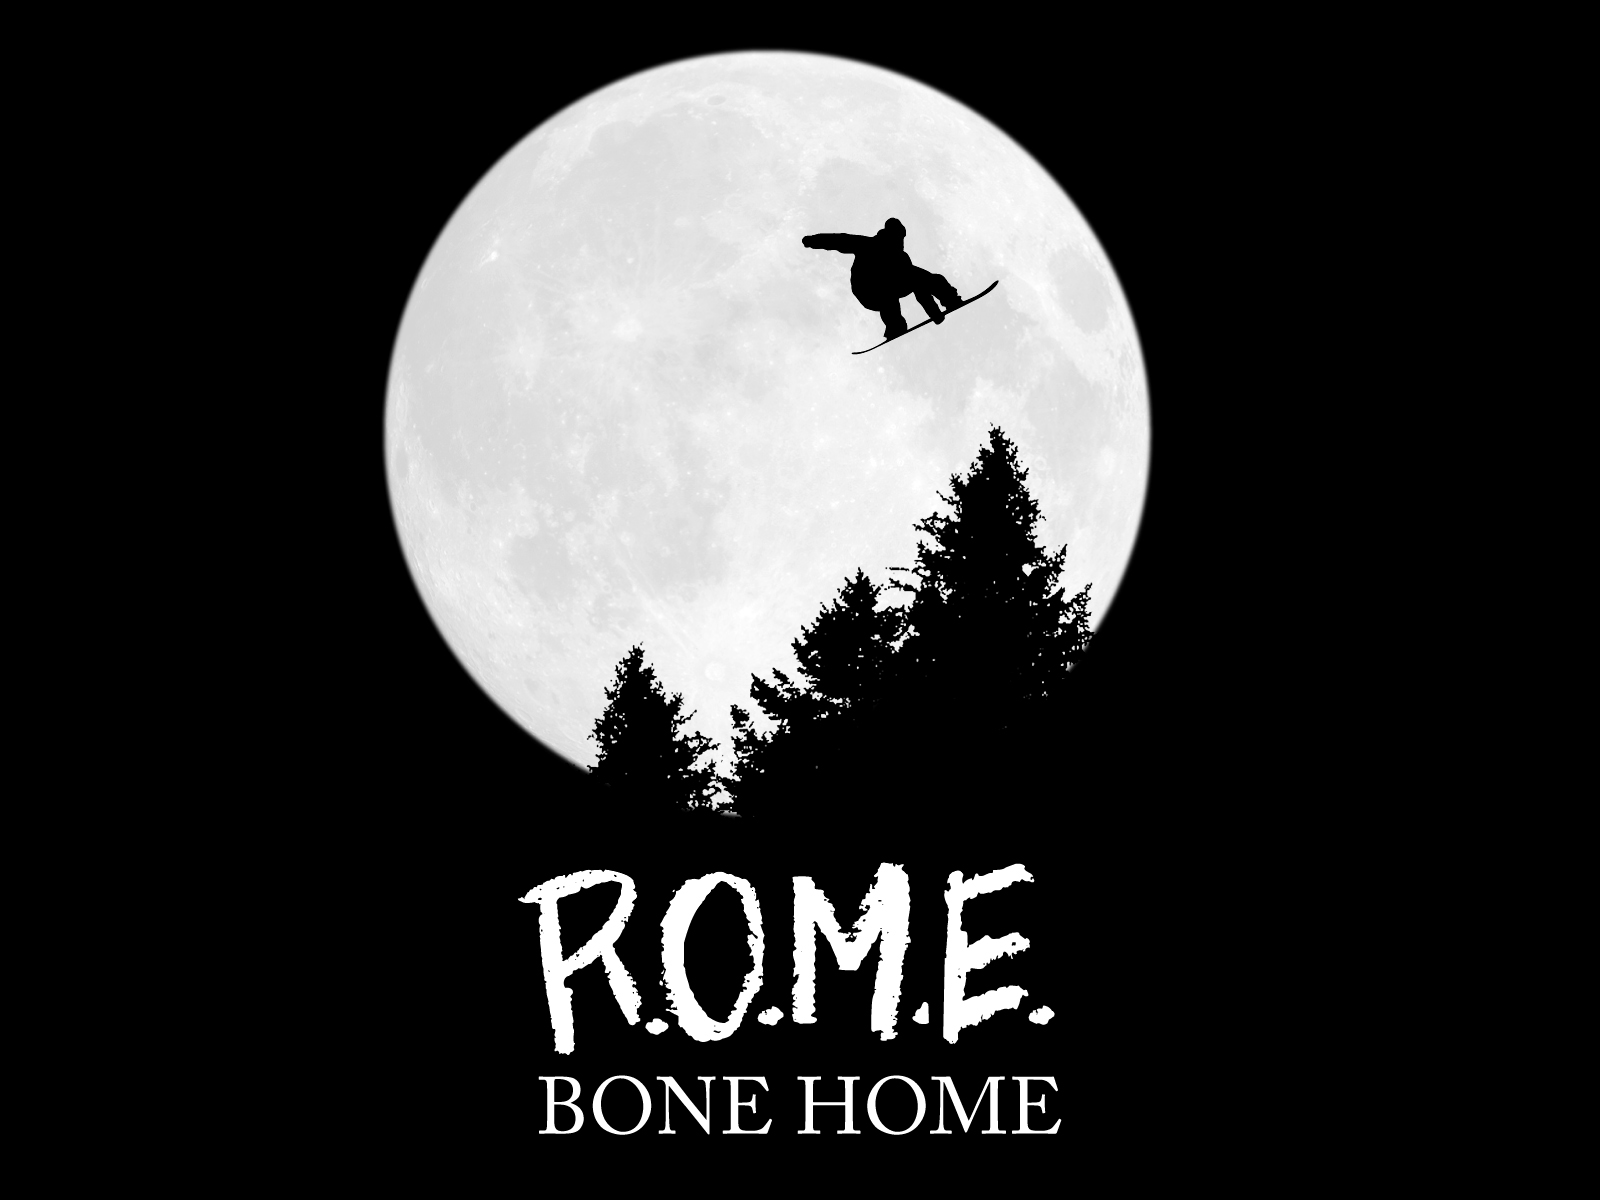 Bone home. By Bone, Rome.